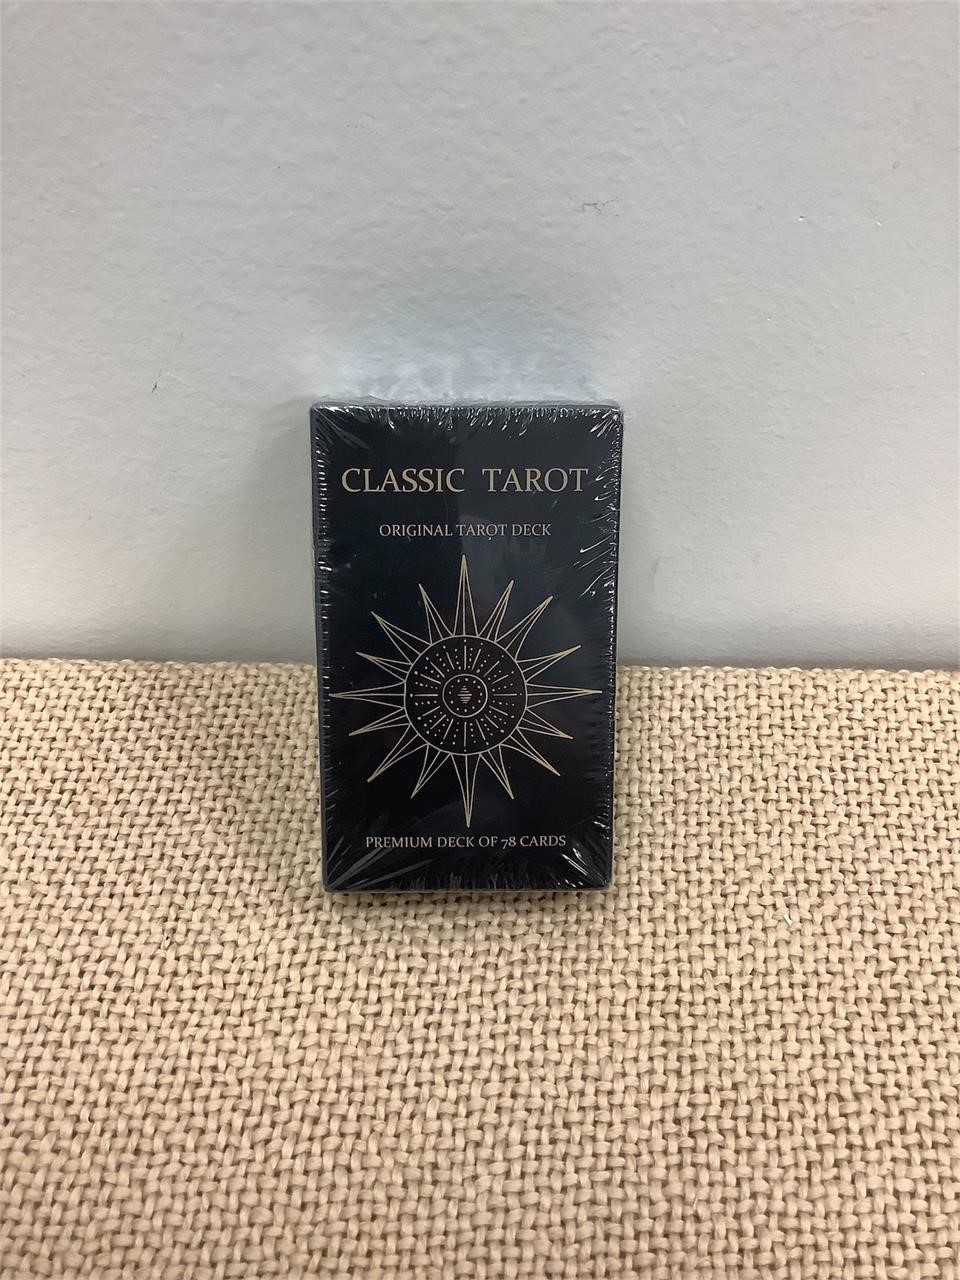 $40  Cranium deck of 78 classic tarot cards